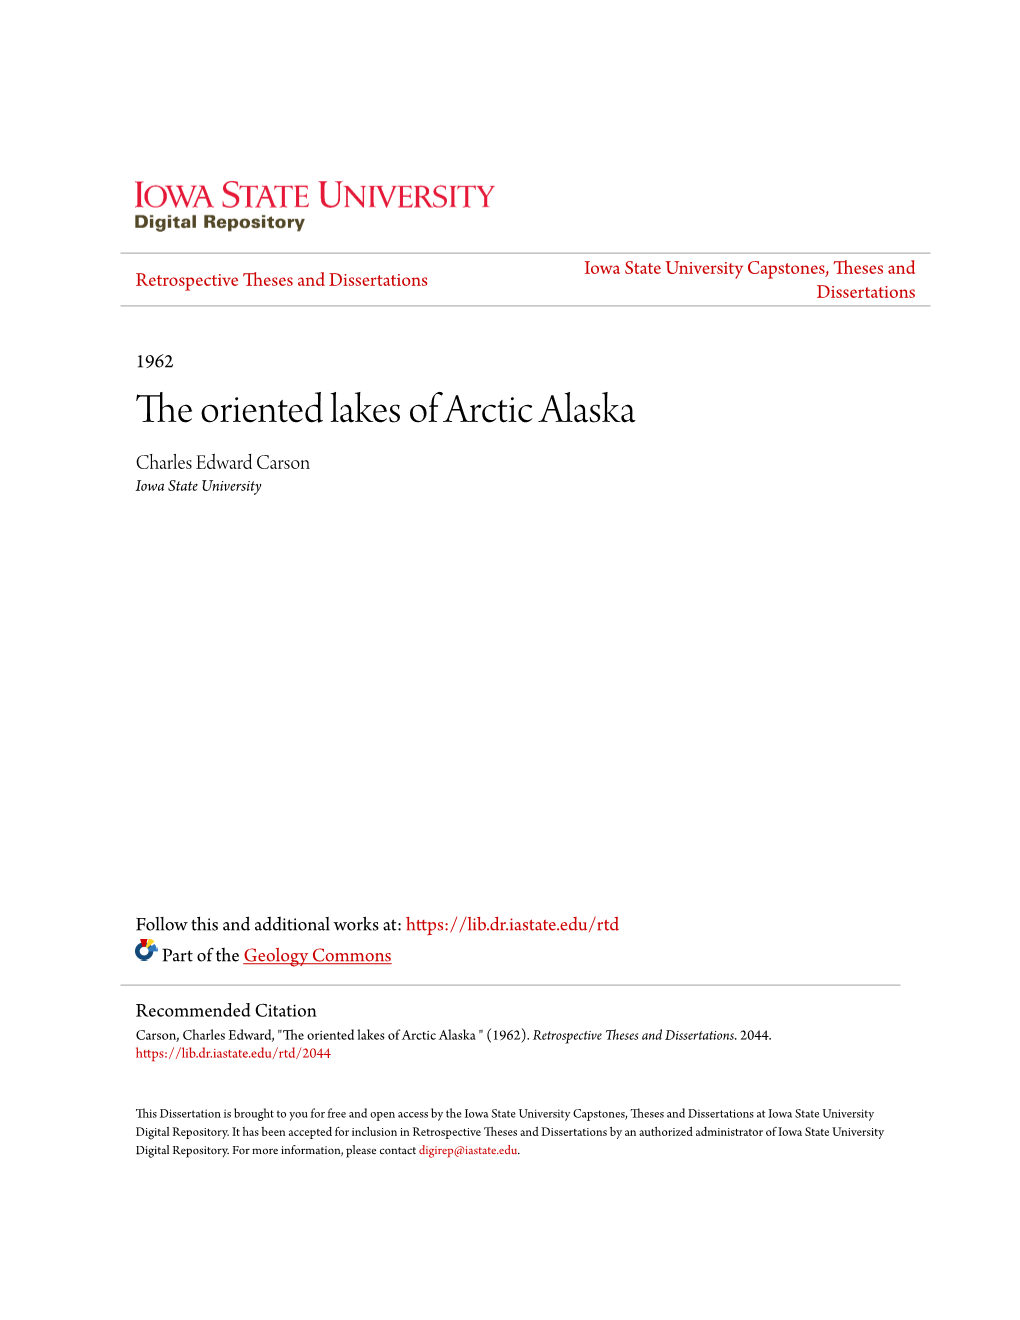 The Oriented Lakes of Arctic Alaska Charles Edward Carson Iowa State University